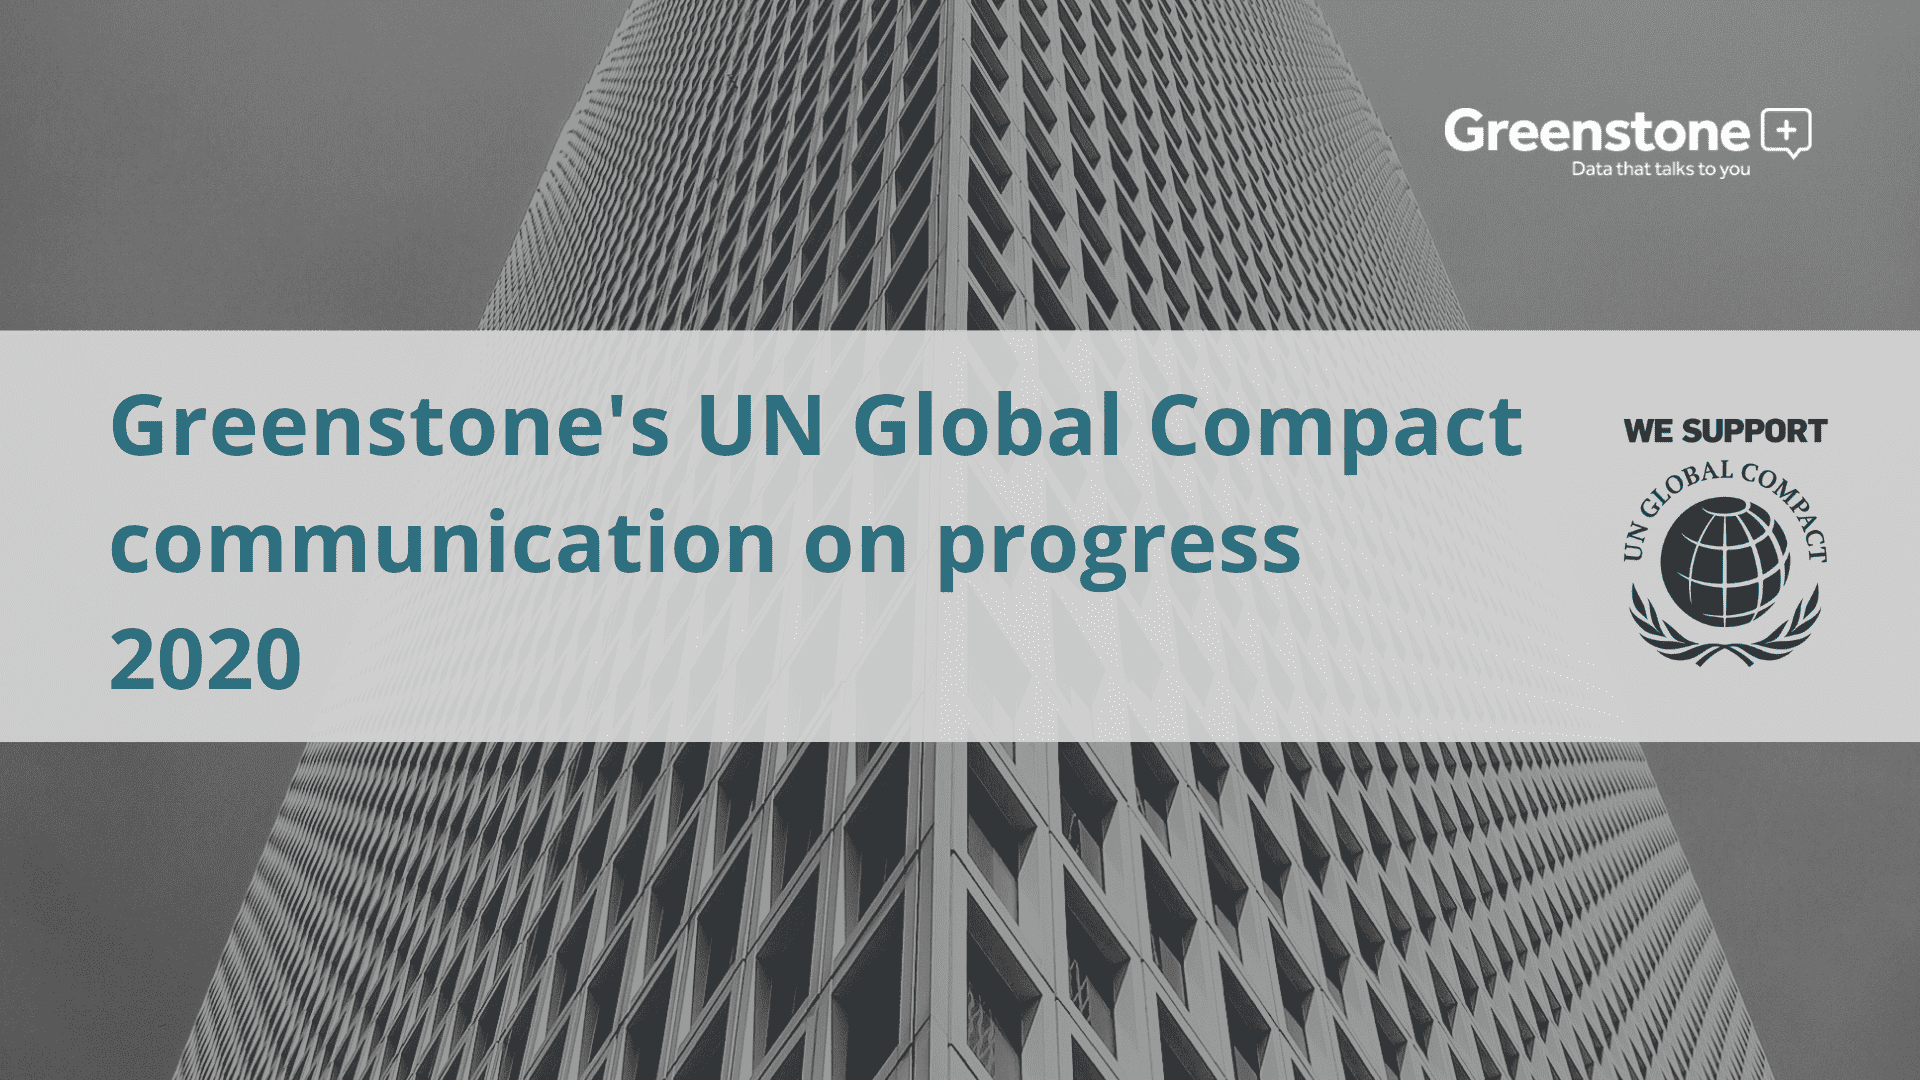 Greenstone's UN Global Compact communication on progress 2020